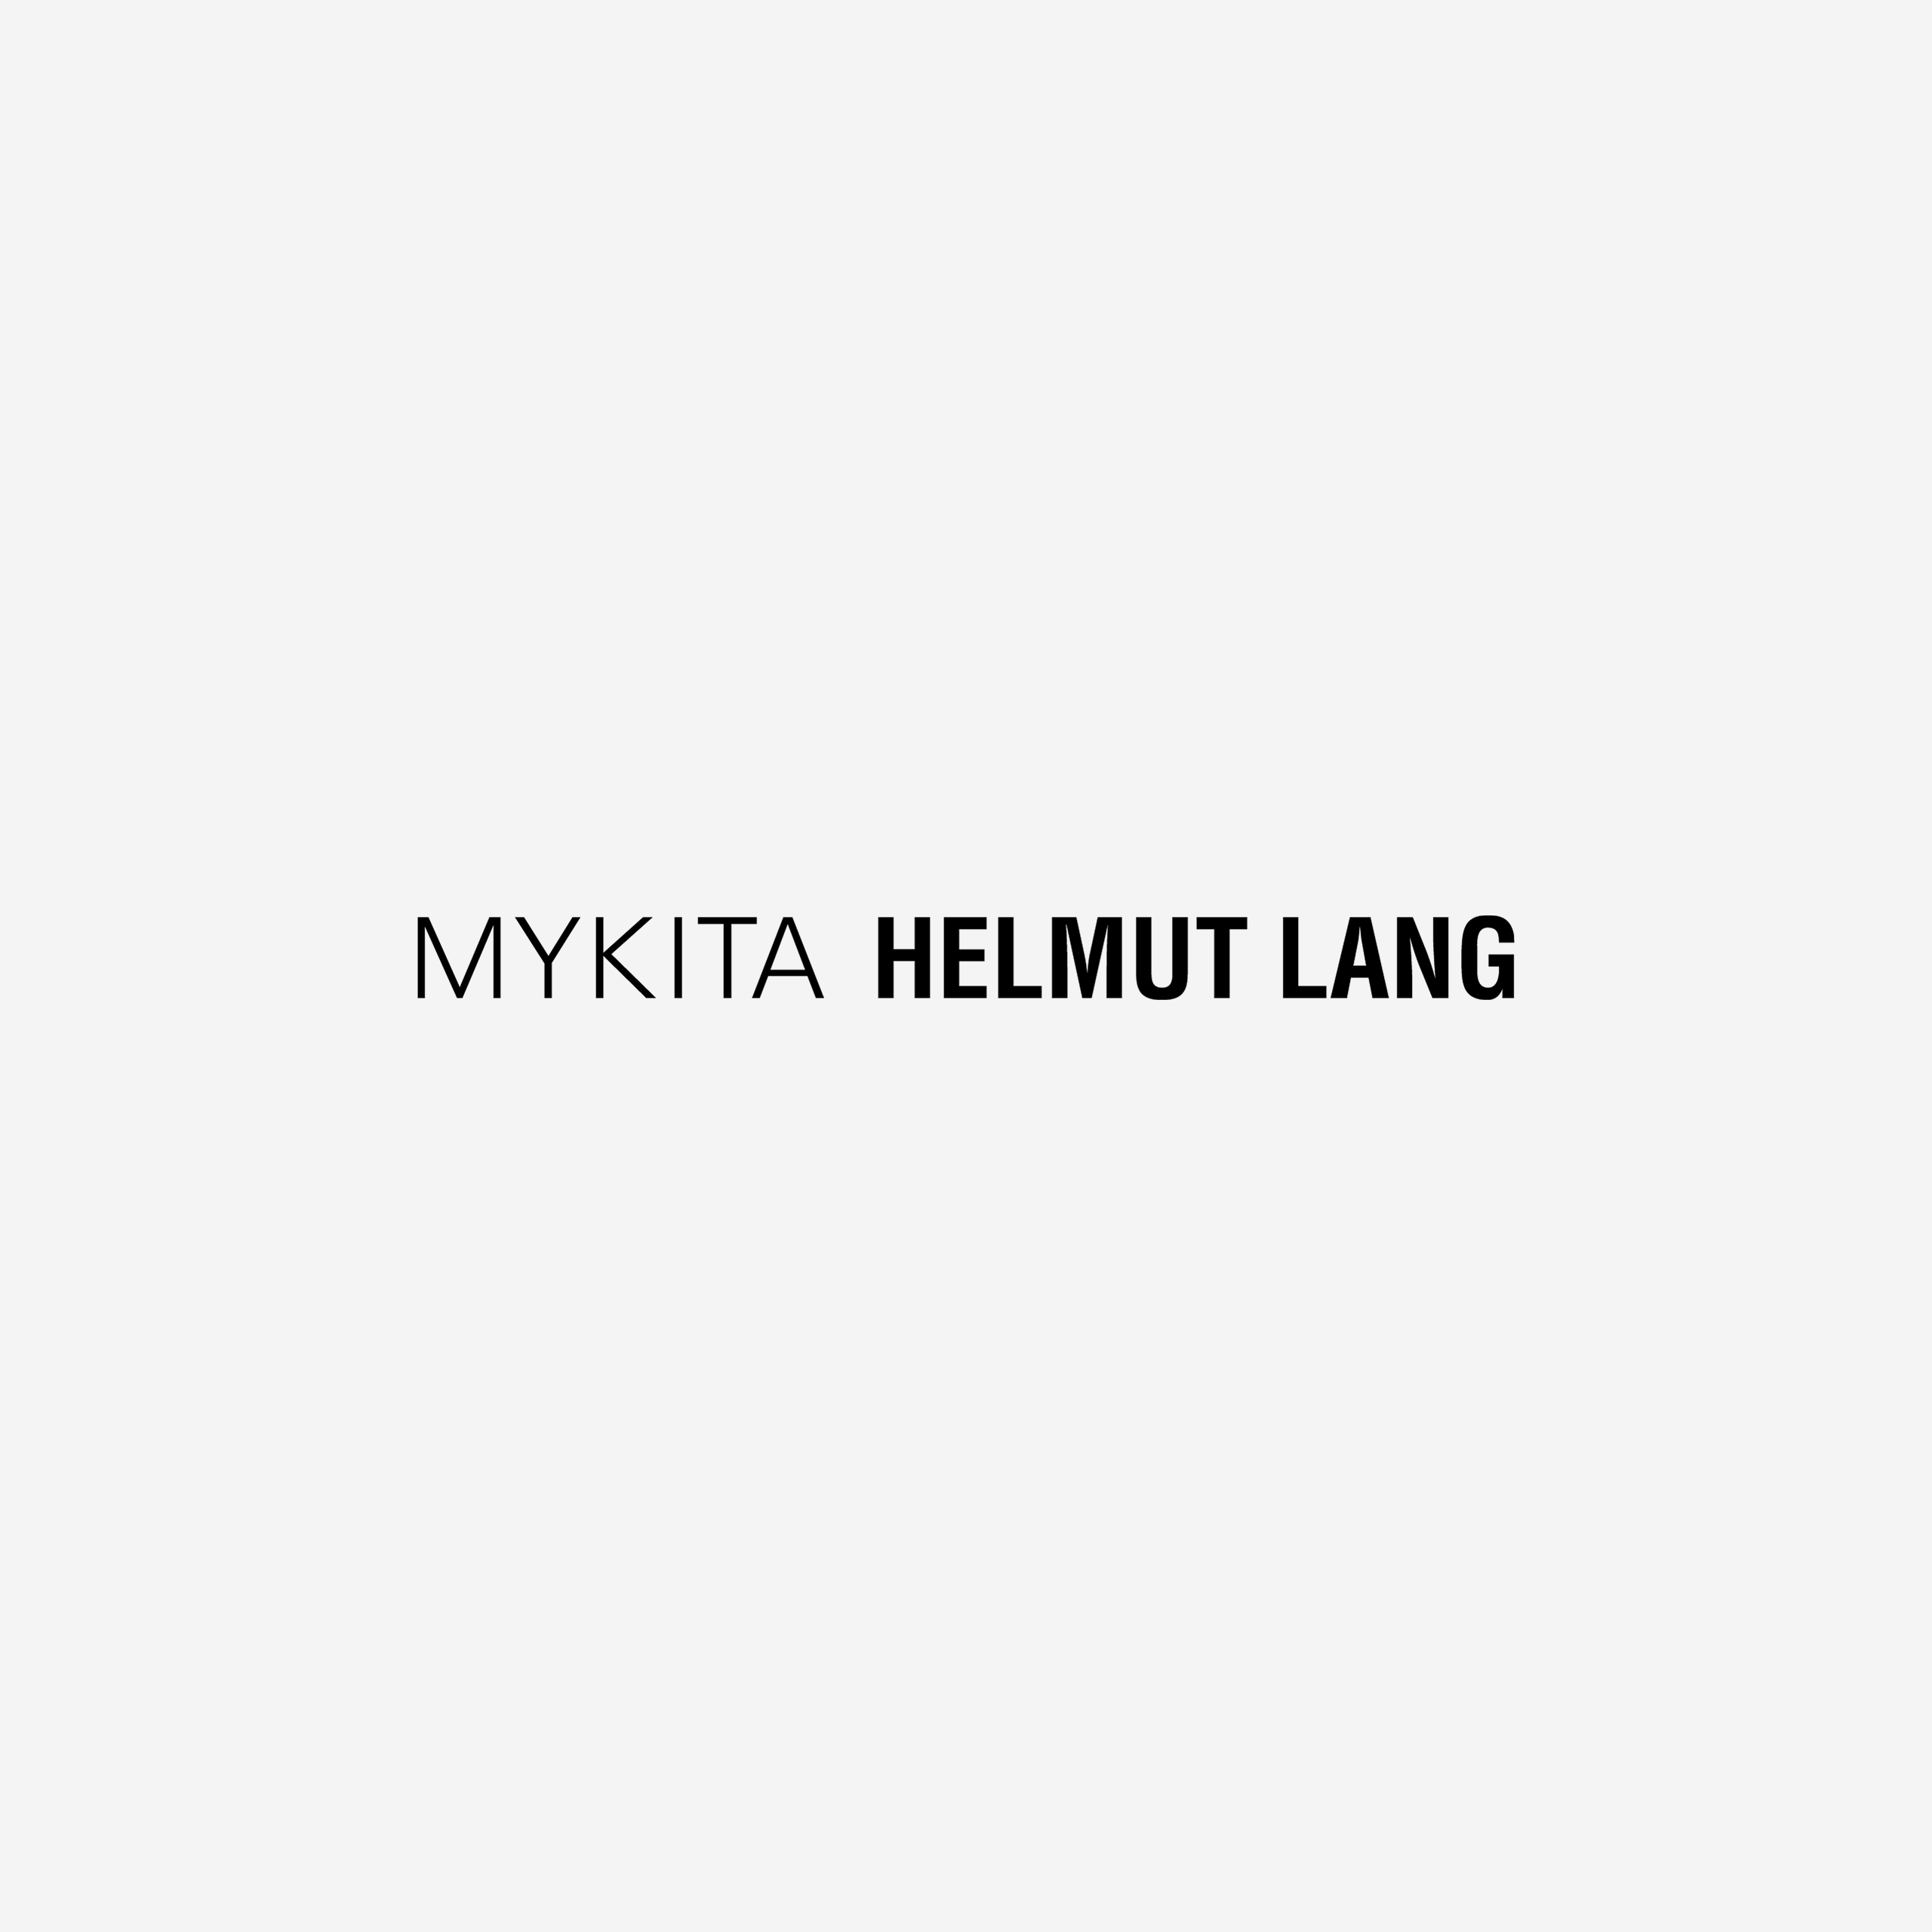 MYKITA® - Handmade Designer Eyewear from Berlin